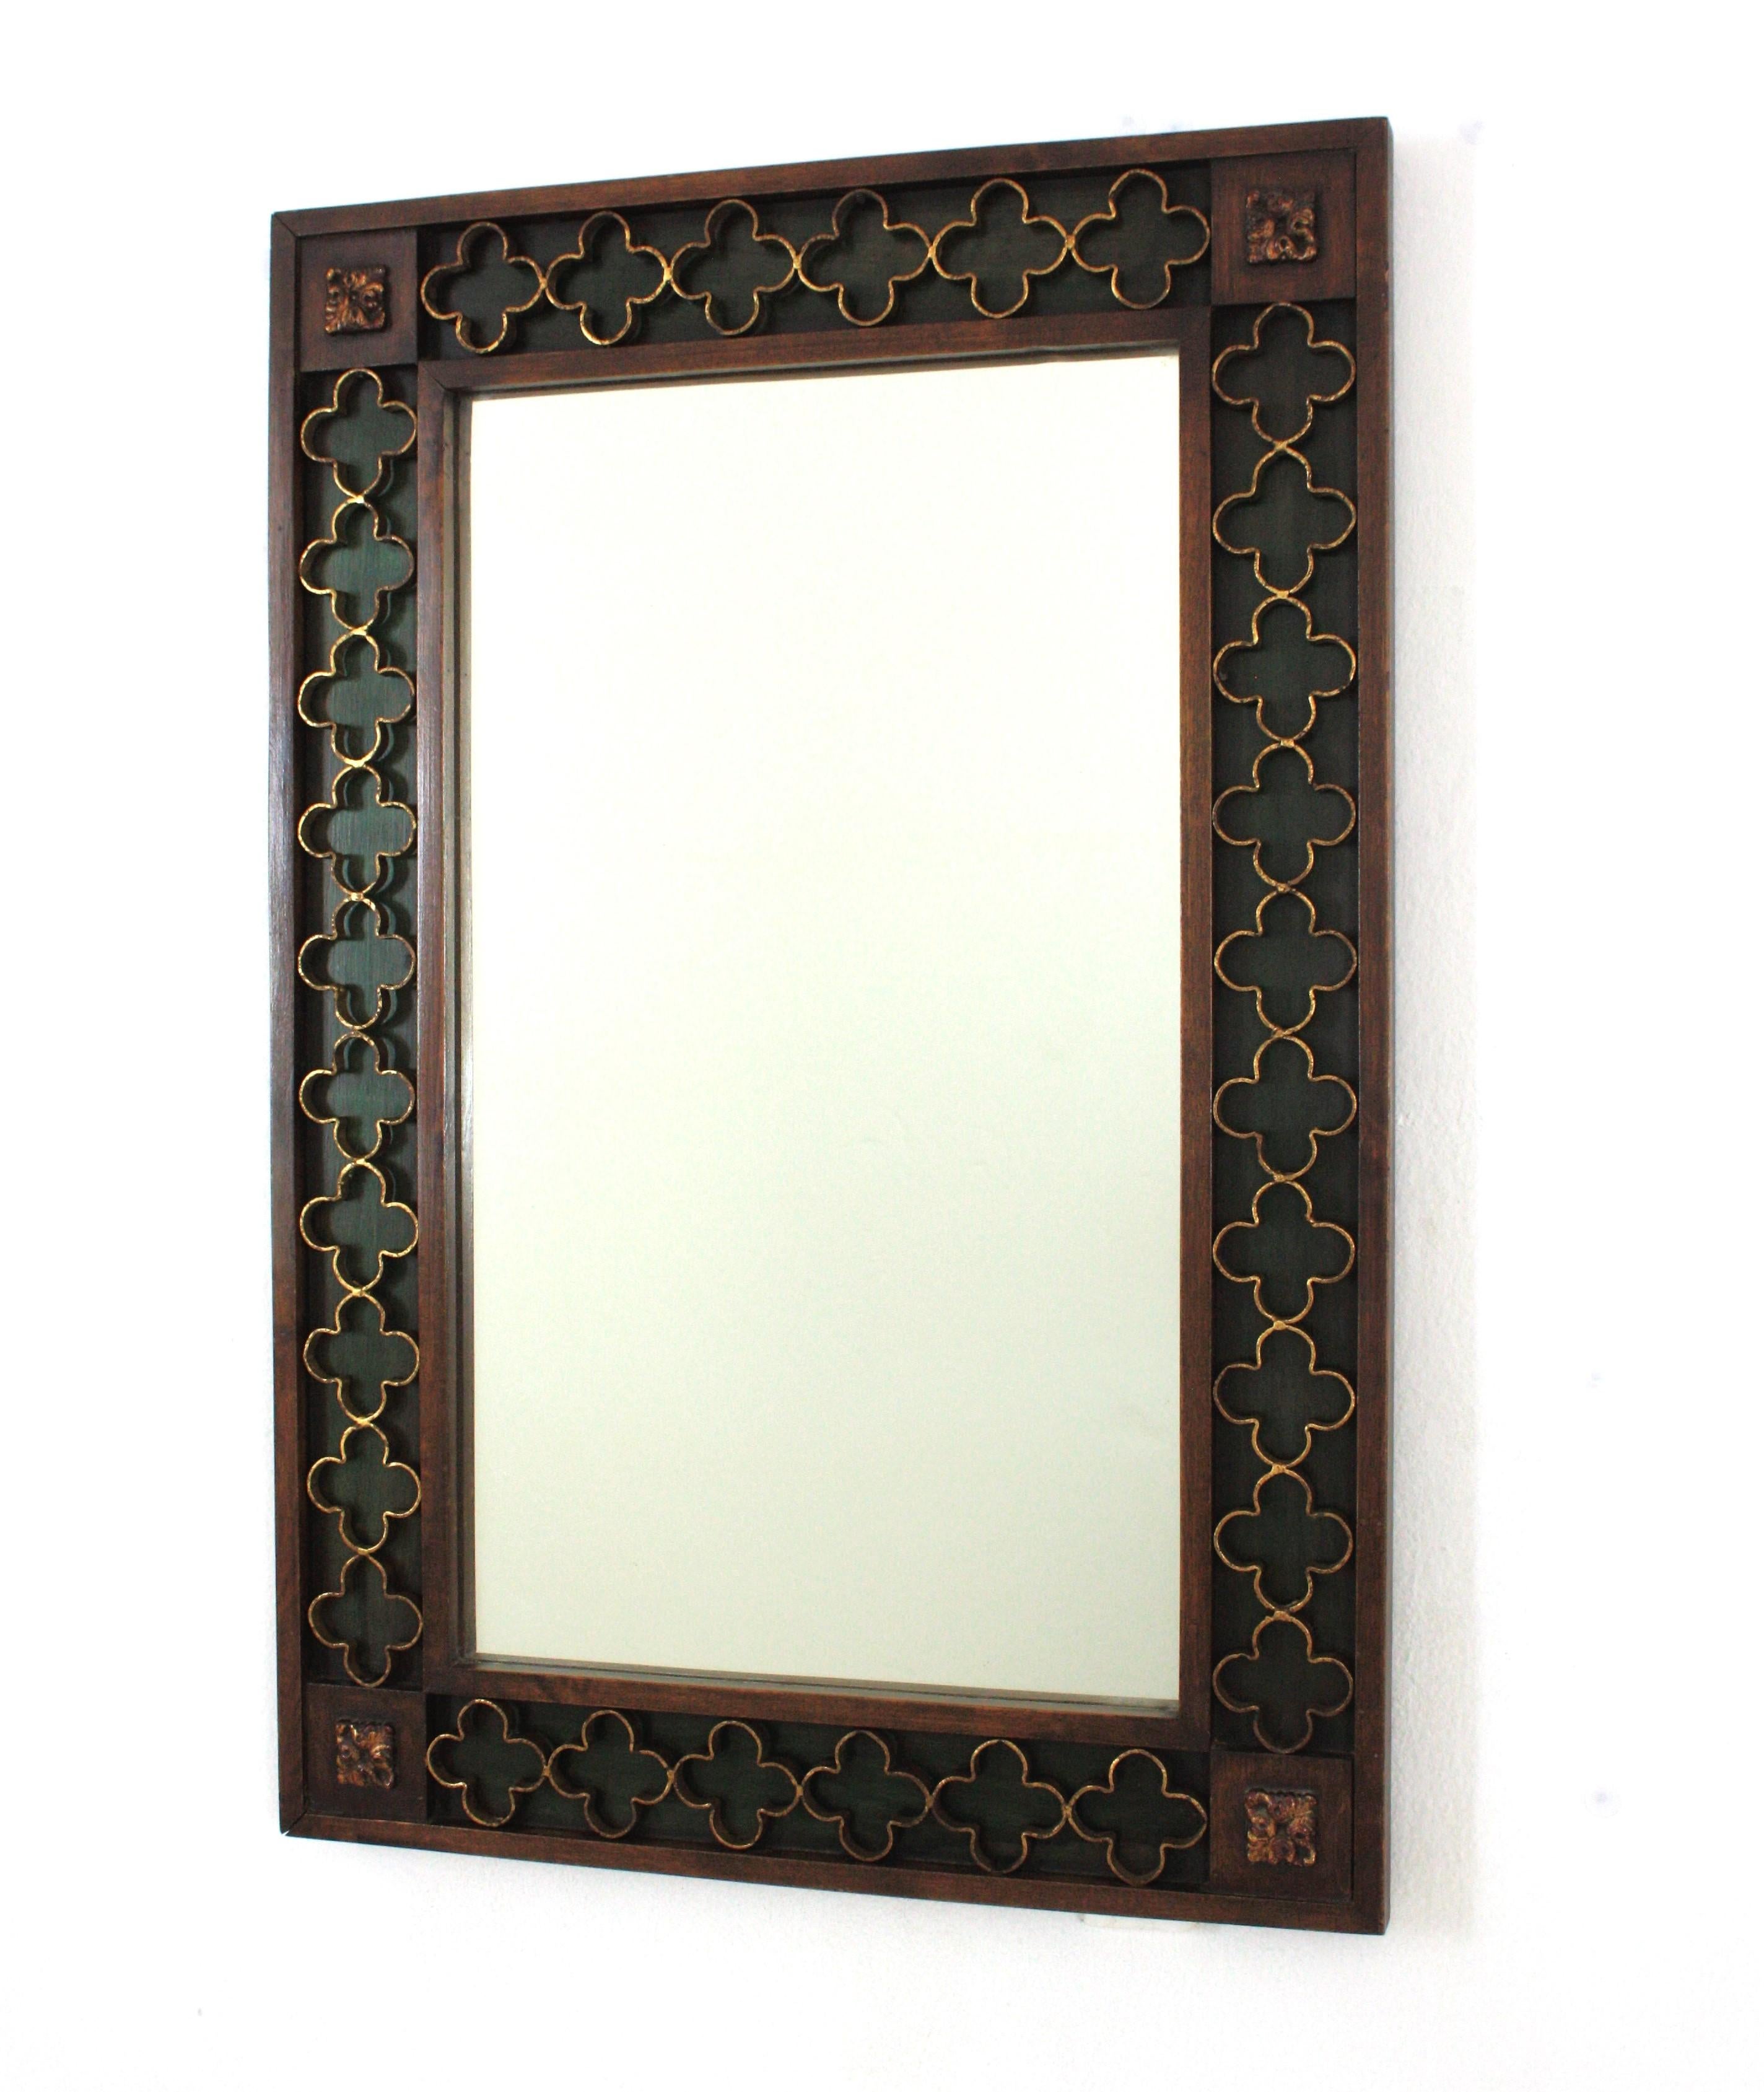 Spanish Revival Rectangular Mirror with Gilt Iron Rosettes Frame 6